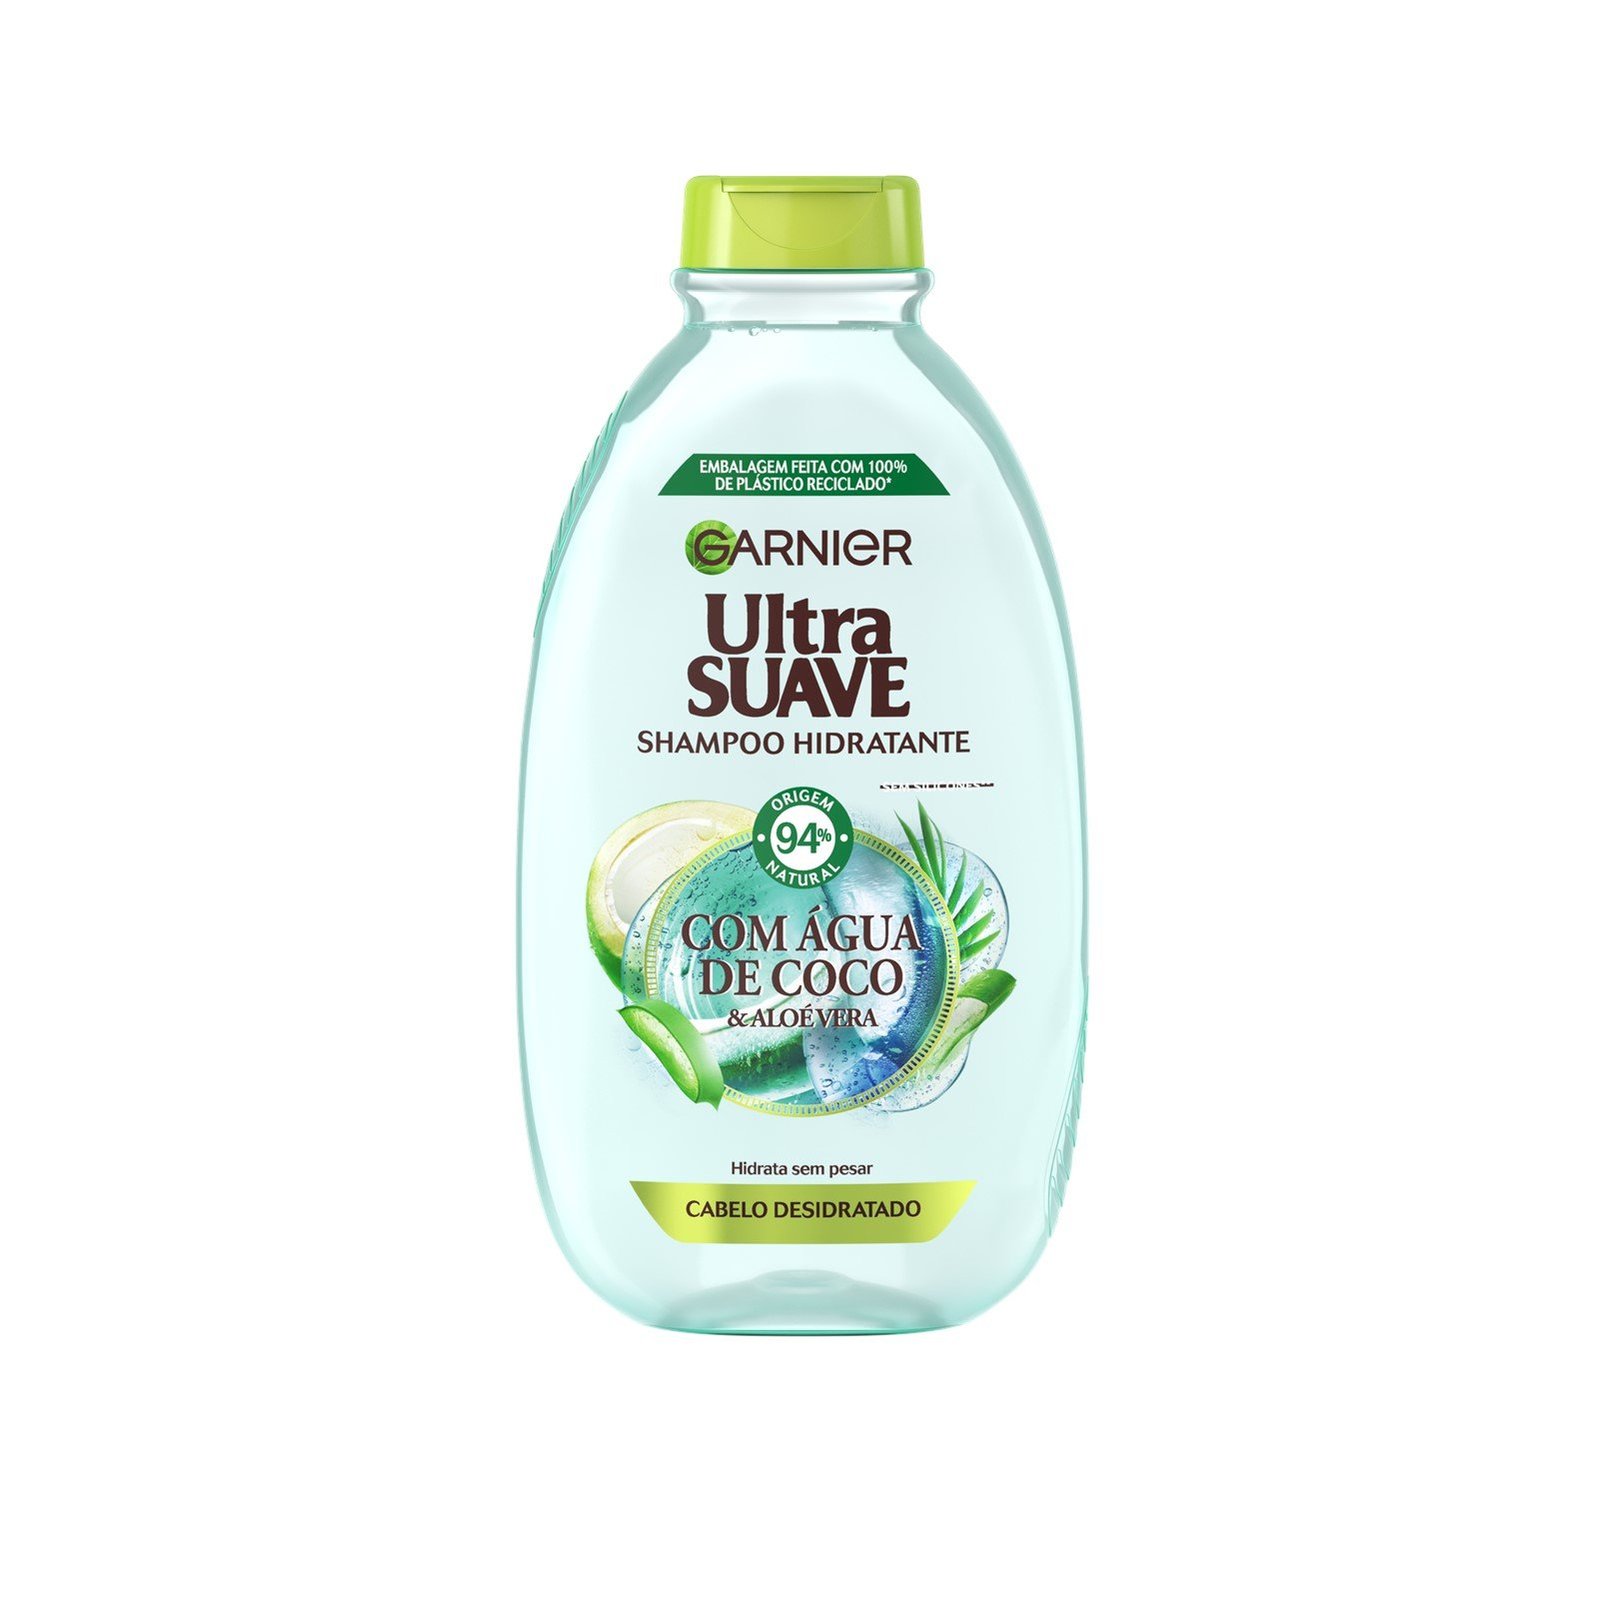 Garnier Ultimate Blends Coconut Water Shampoo 400ml